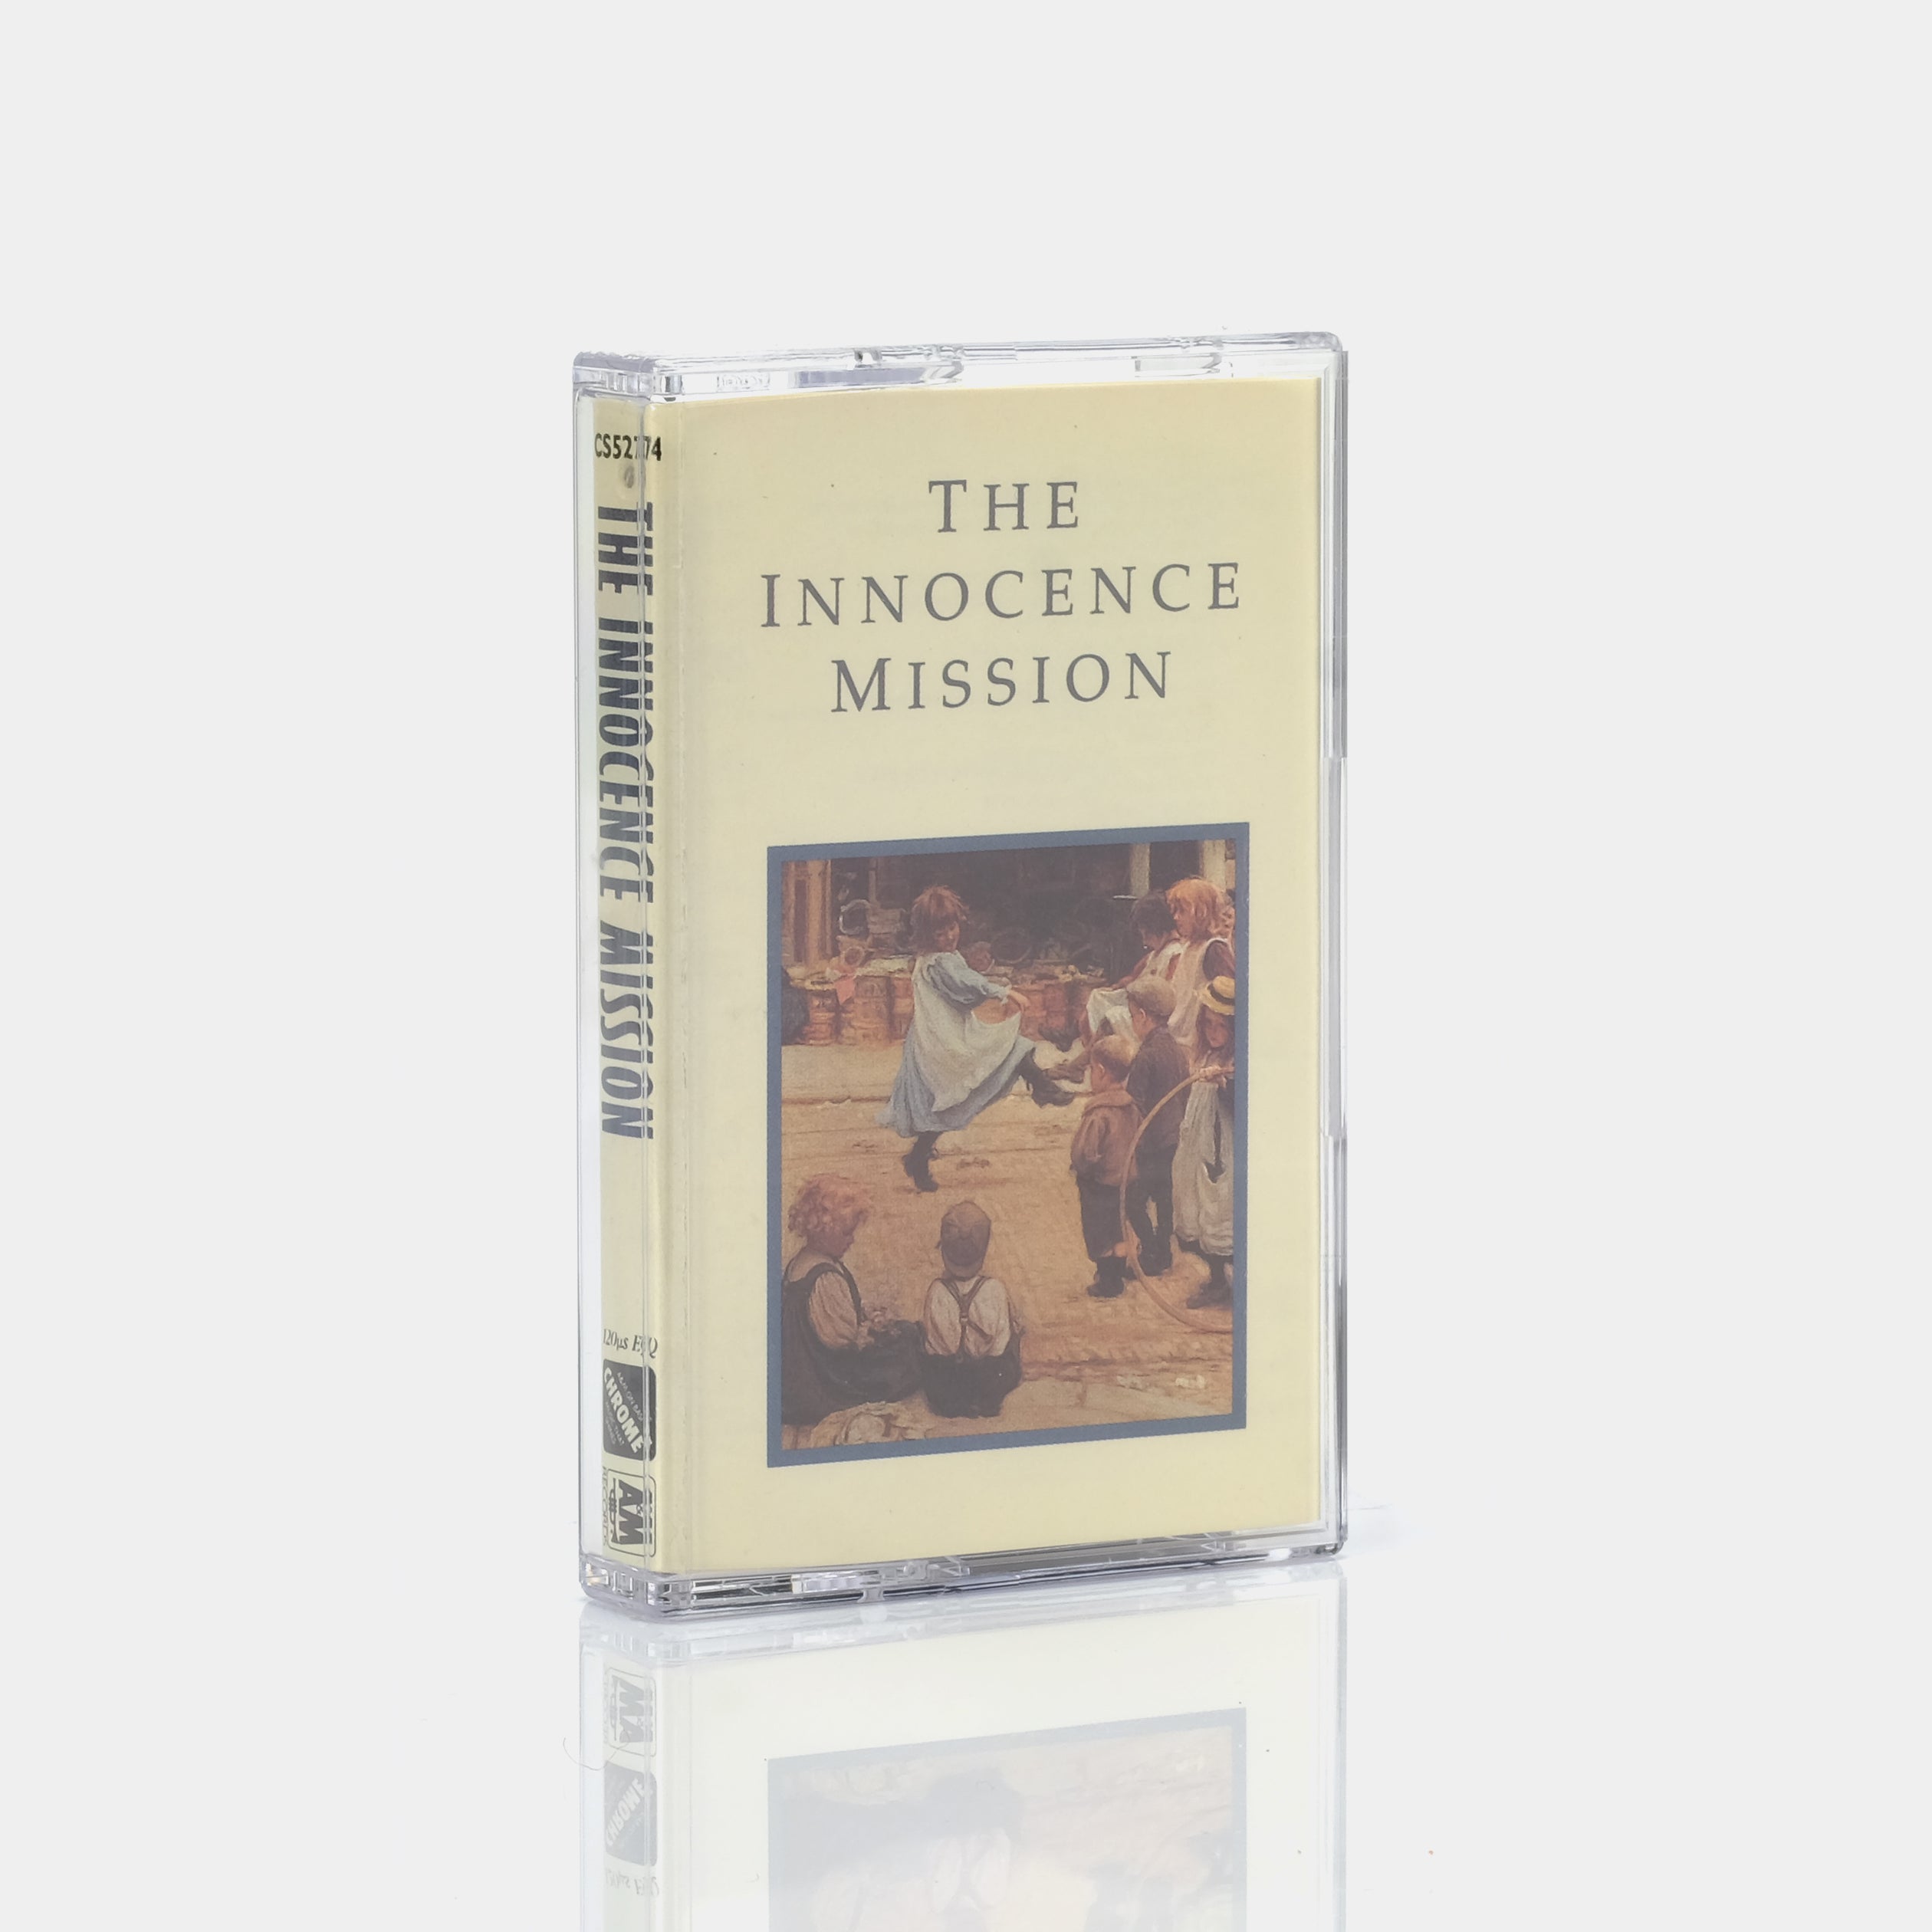 The Innocence Mission - The Innocence Mission Cassette Tape